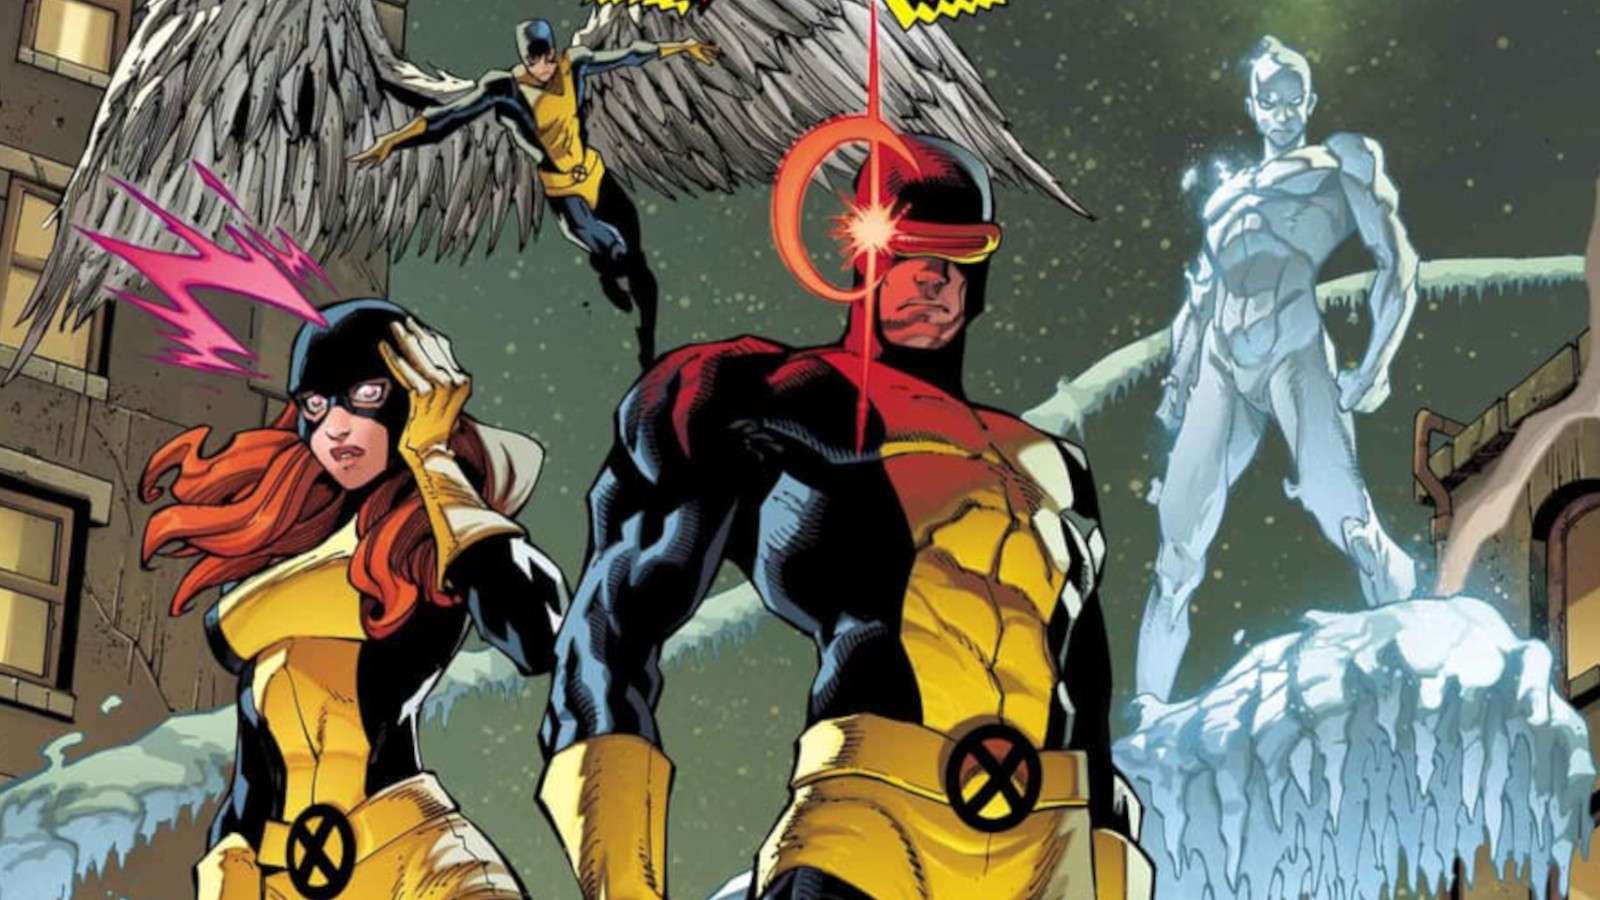 Original X-Men #1 cover art